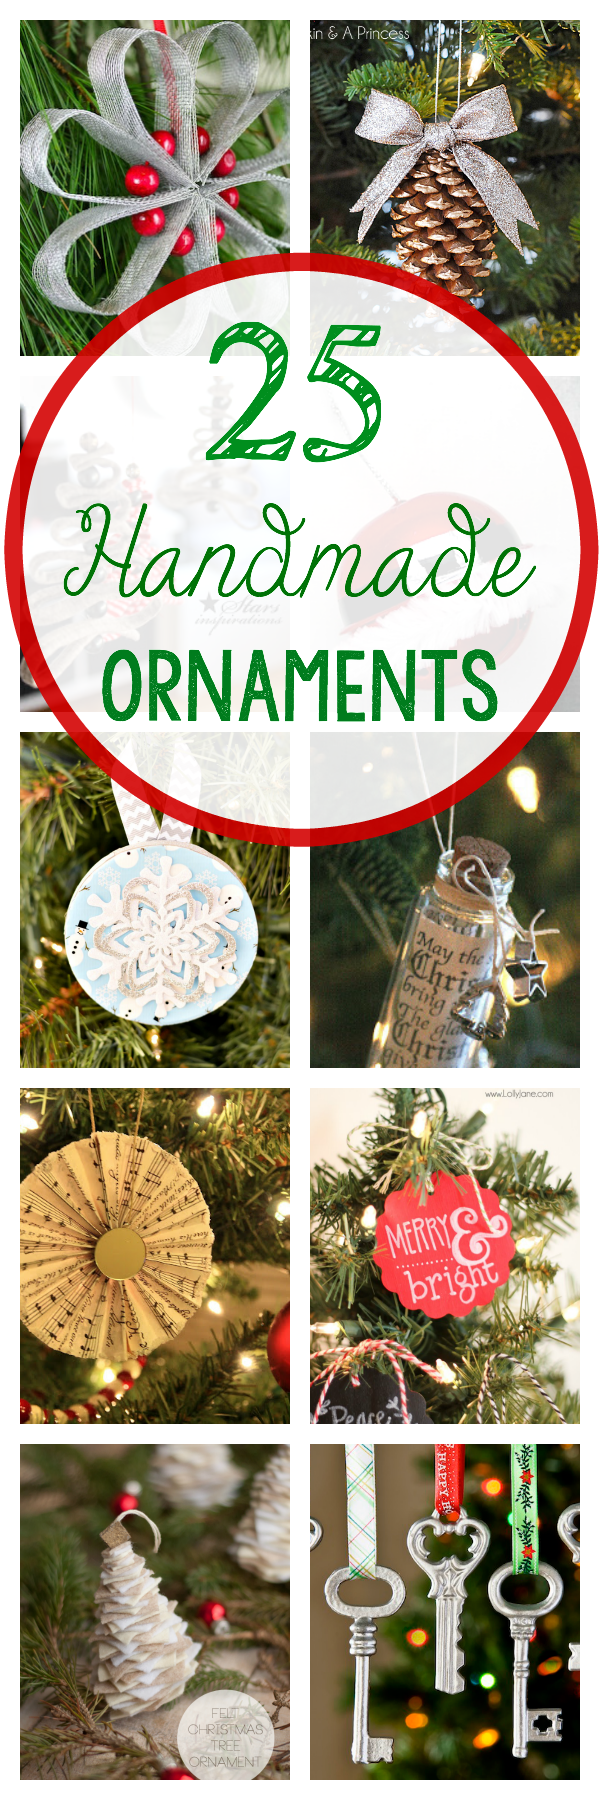 25 Handmade Christmas Ornaments
